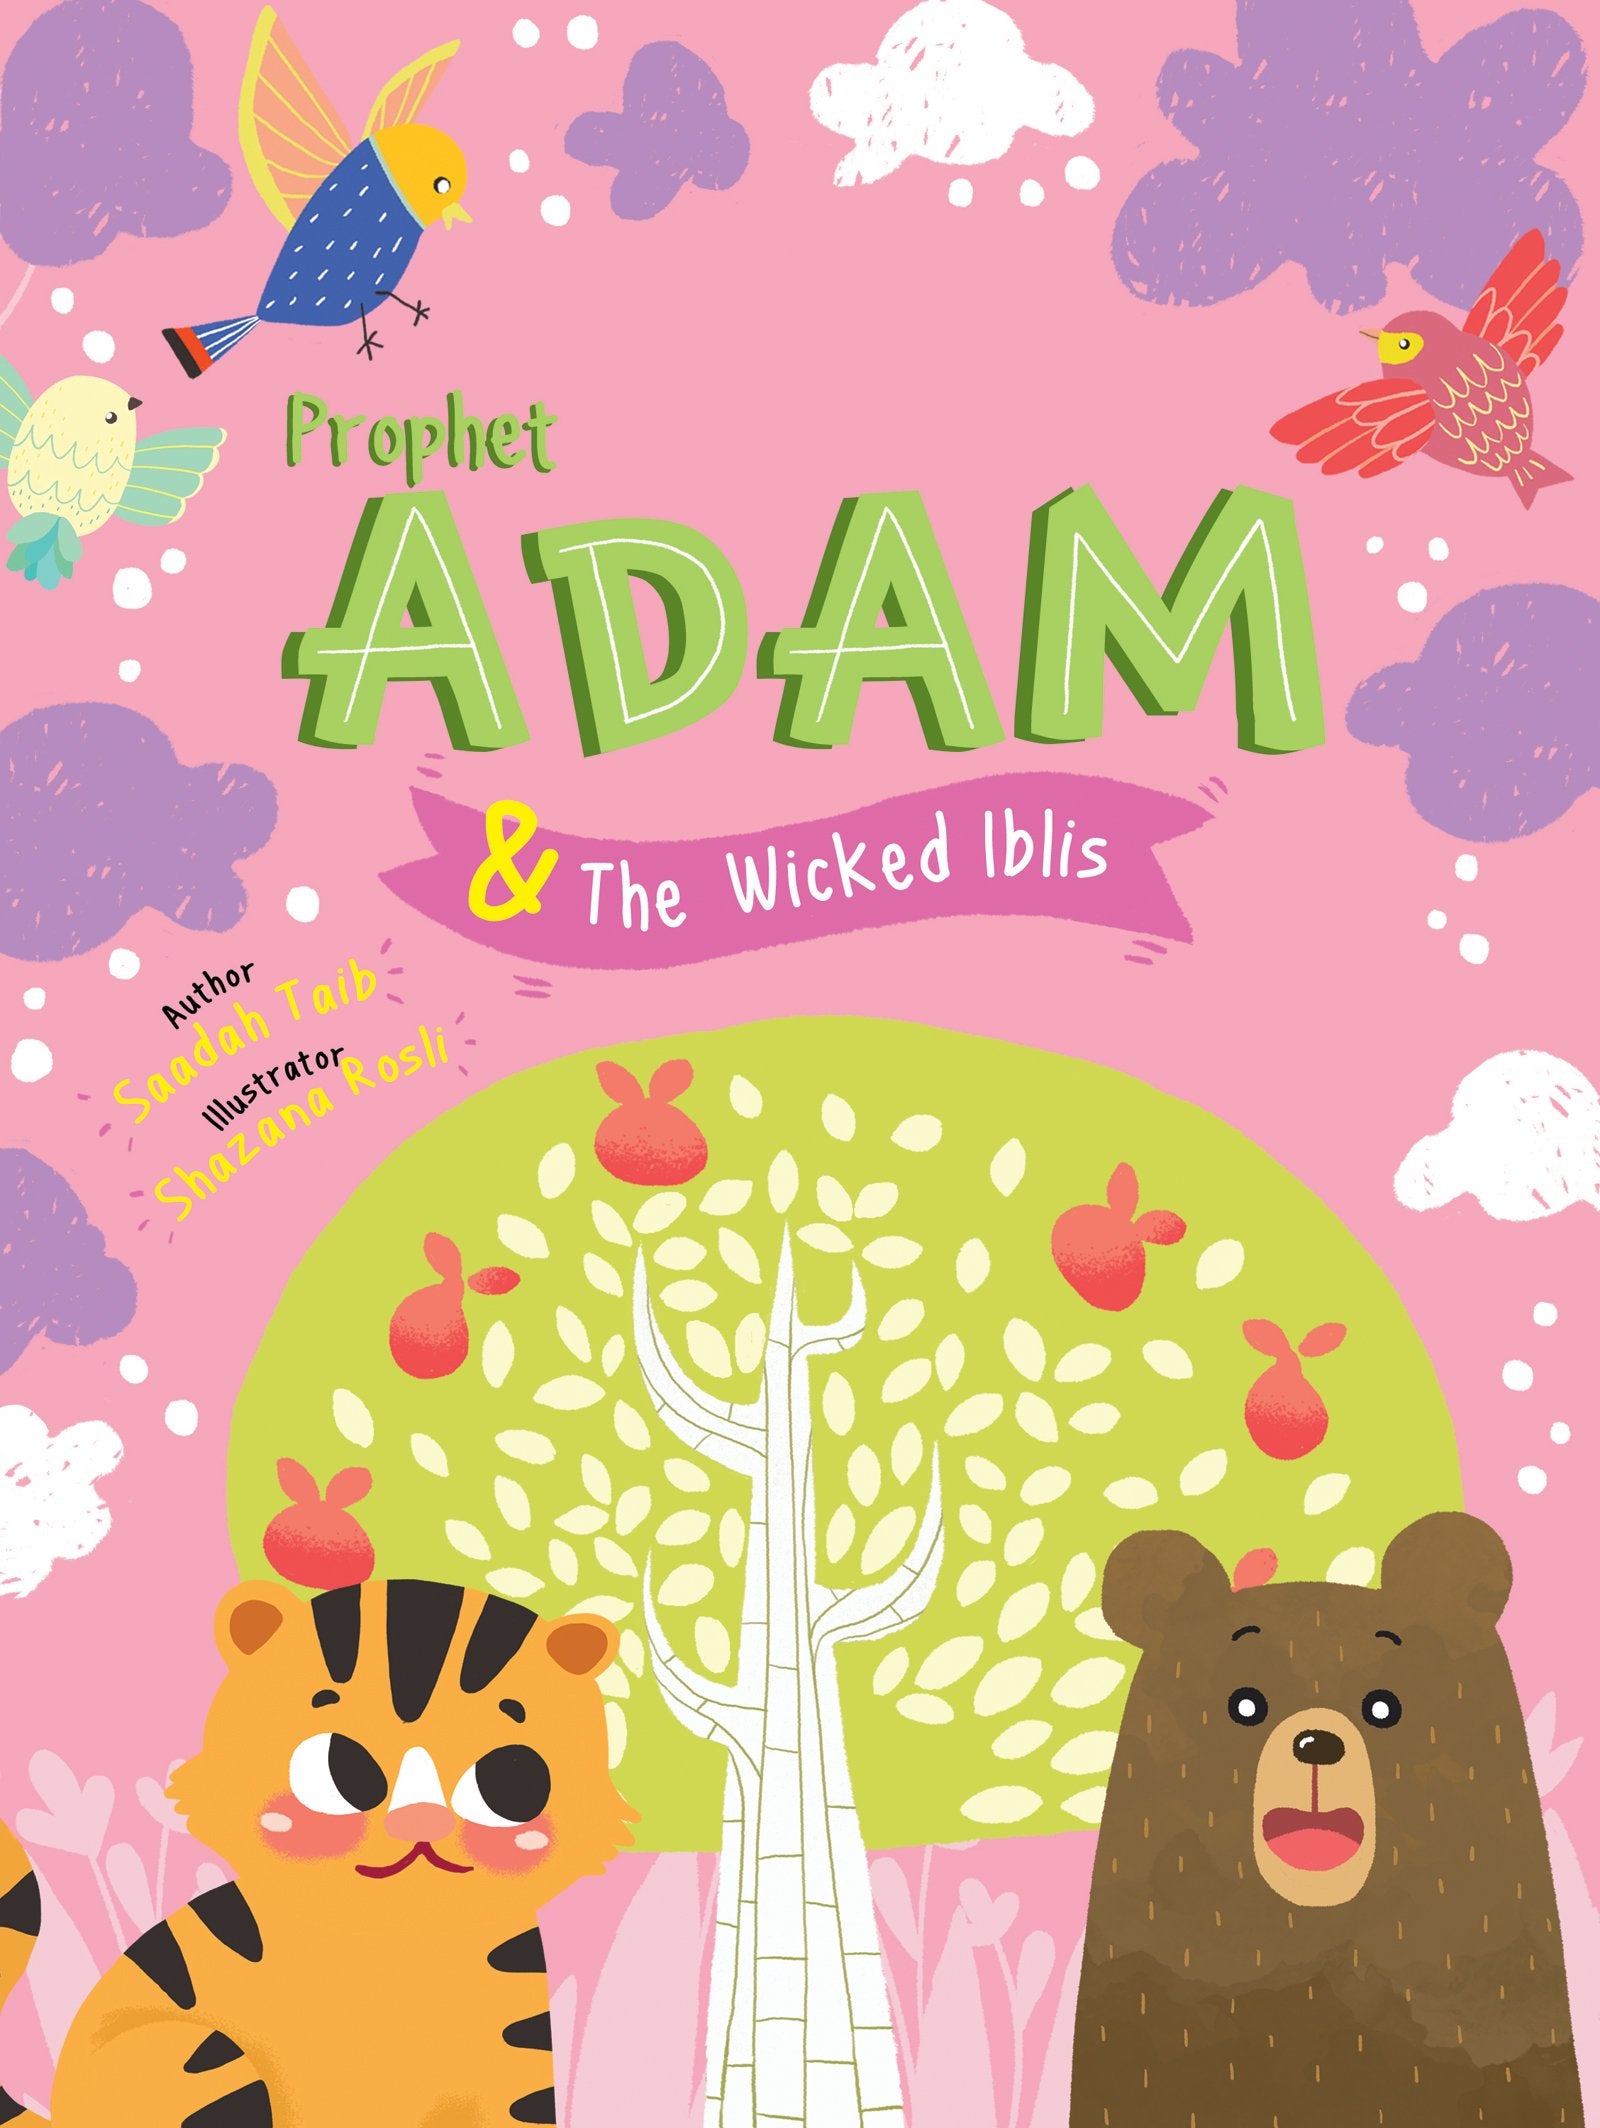 The Prophets of Islam Activity Book- Prophet Adam AS & Wicked Iblis